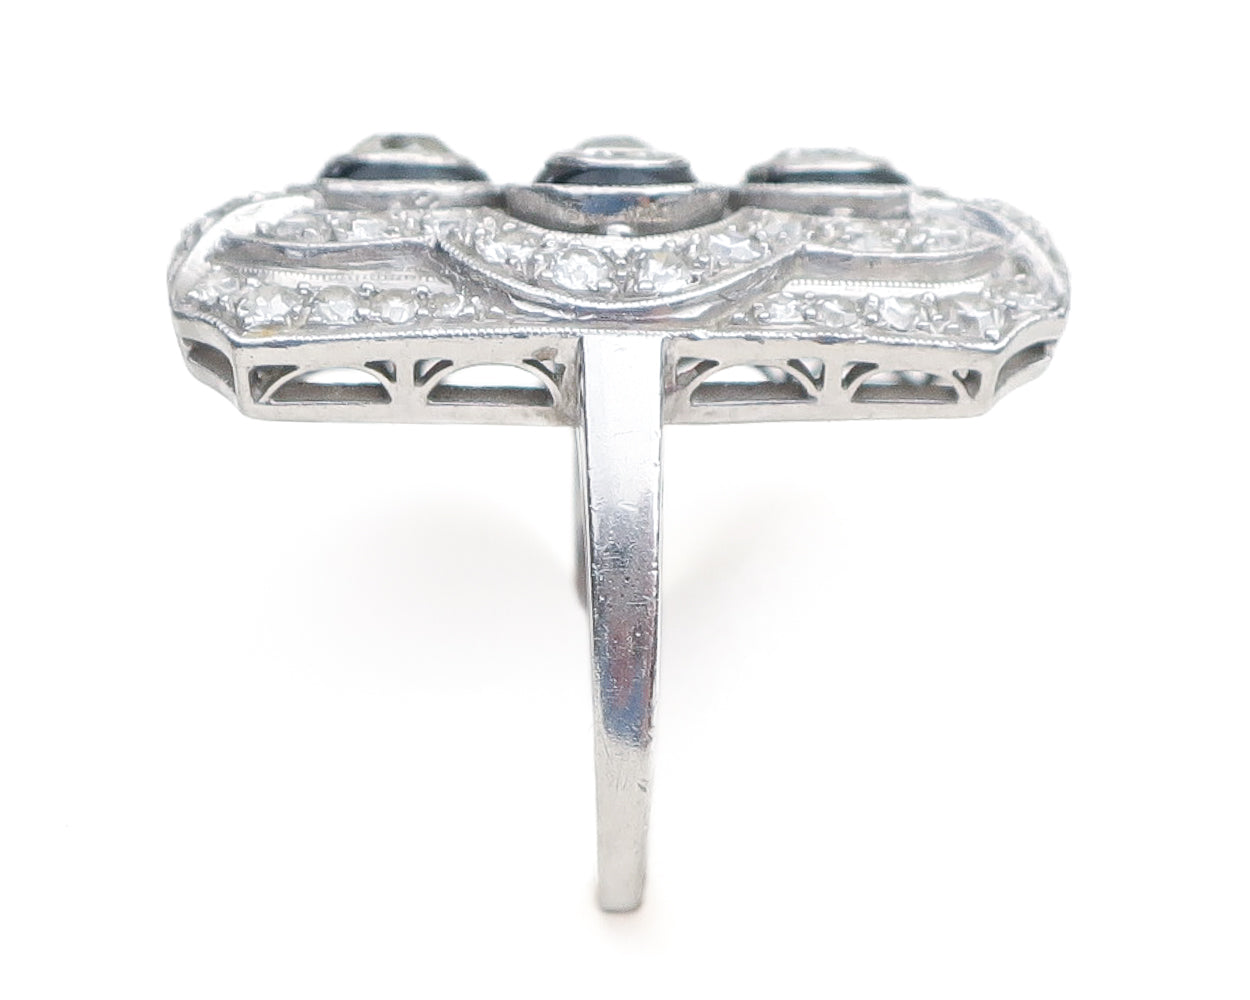 Art Deco Diamond Ring with Onyx & Rubies